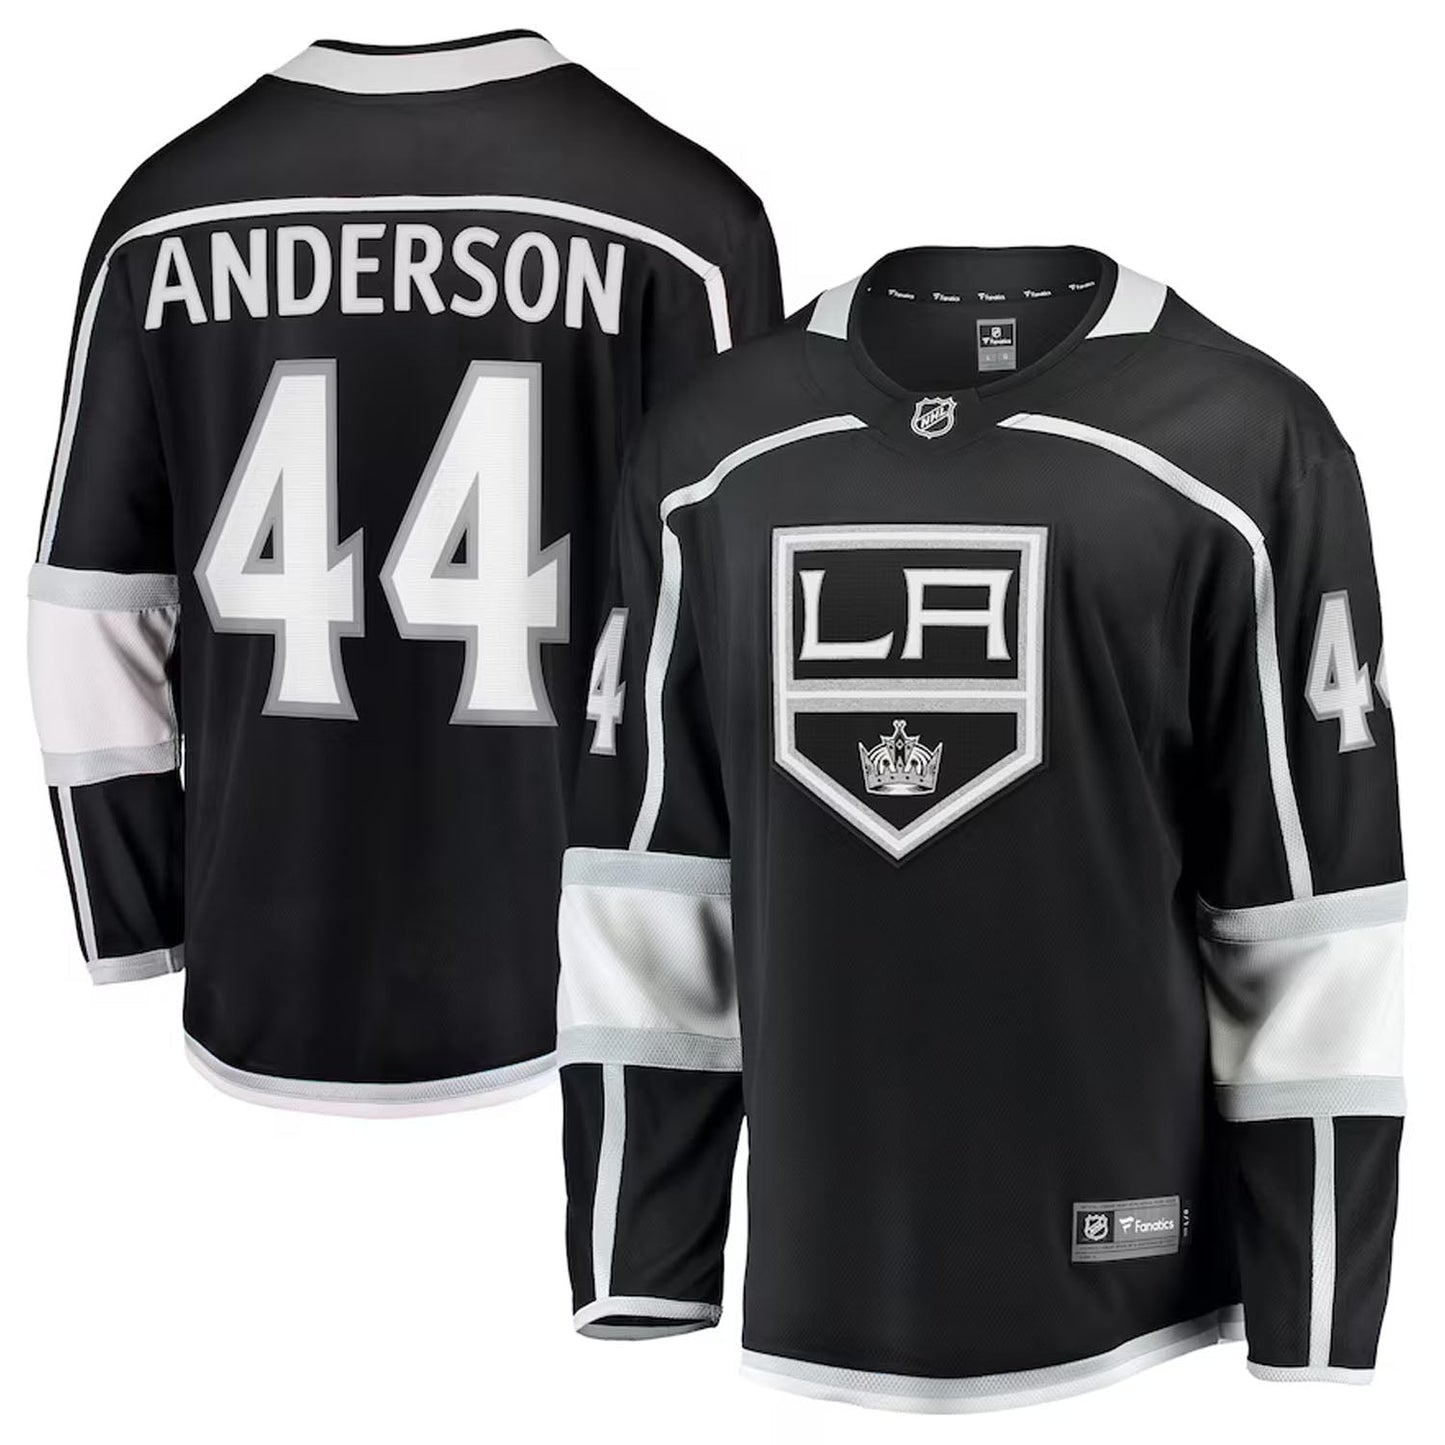 NHL Mikey Anderson La Kings 44 Jersey